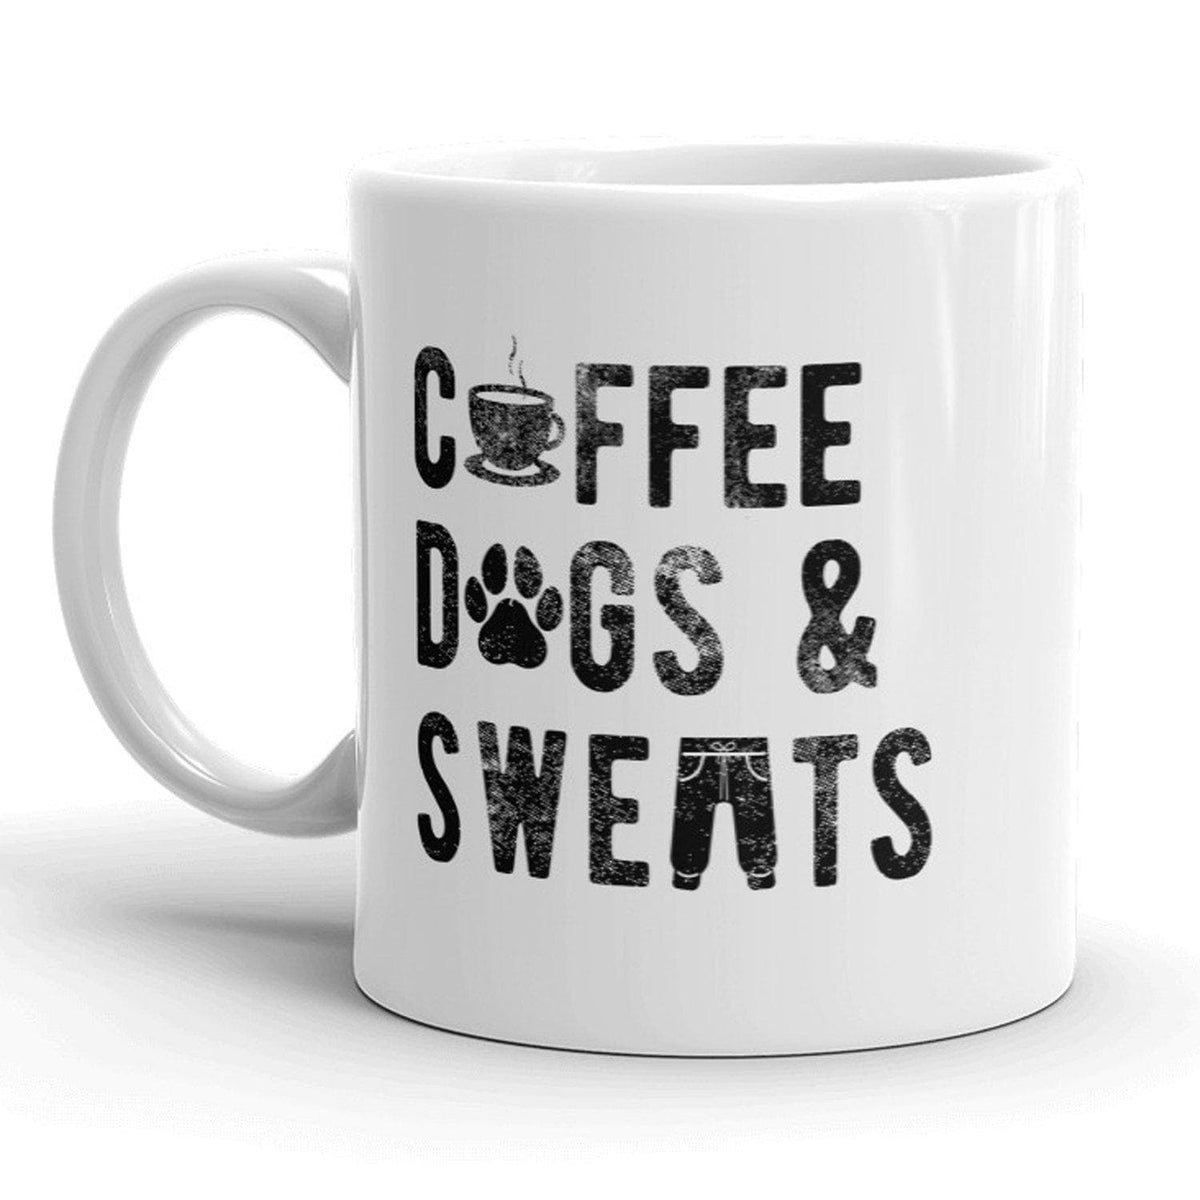 Coffee Dogs And Sweats Mug - Crazy Dog T-Shirts